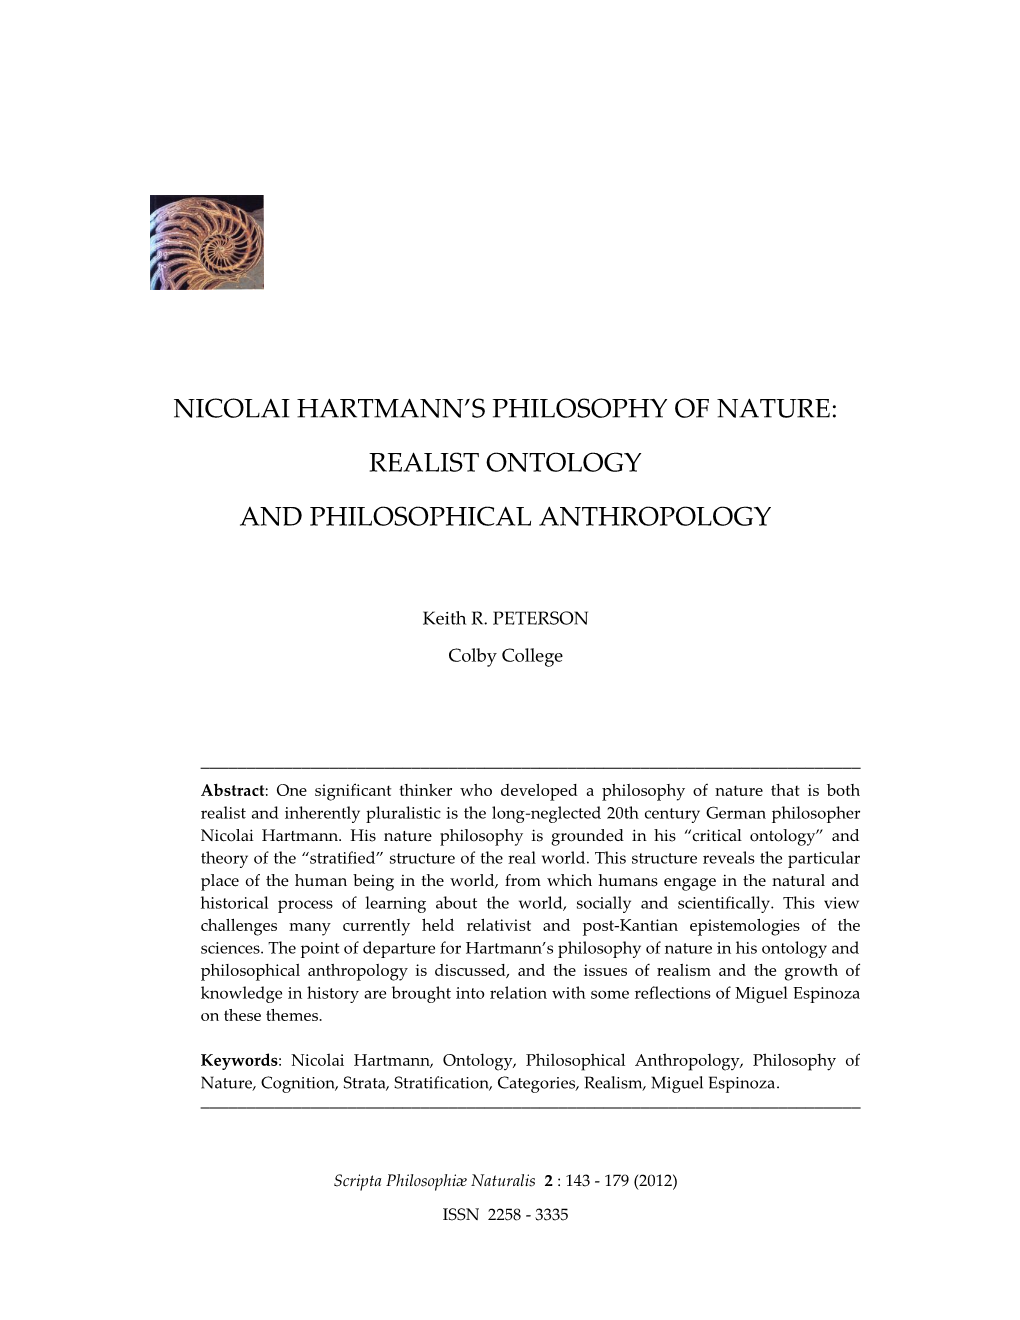 Nicolai Hartmann's Philosophy of Nature